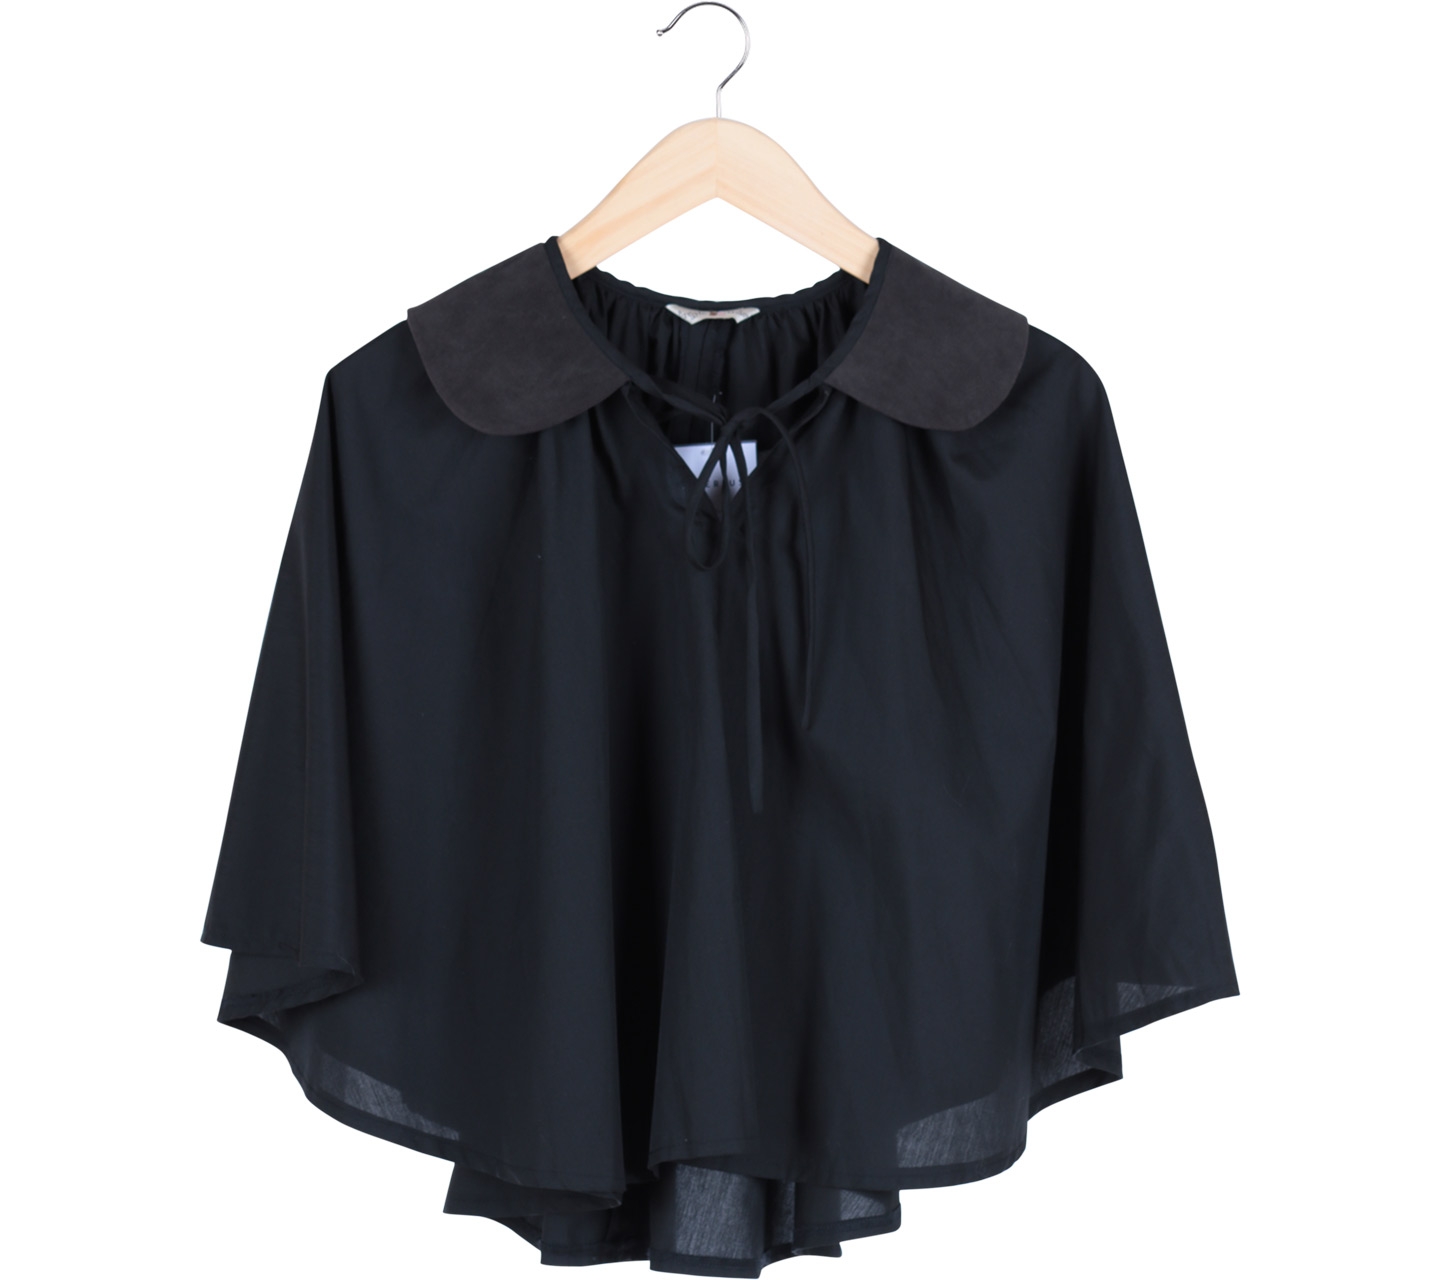 Argyle Oxford Black Velvet Collar Cape Others